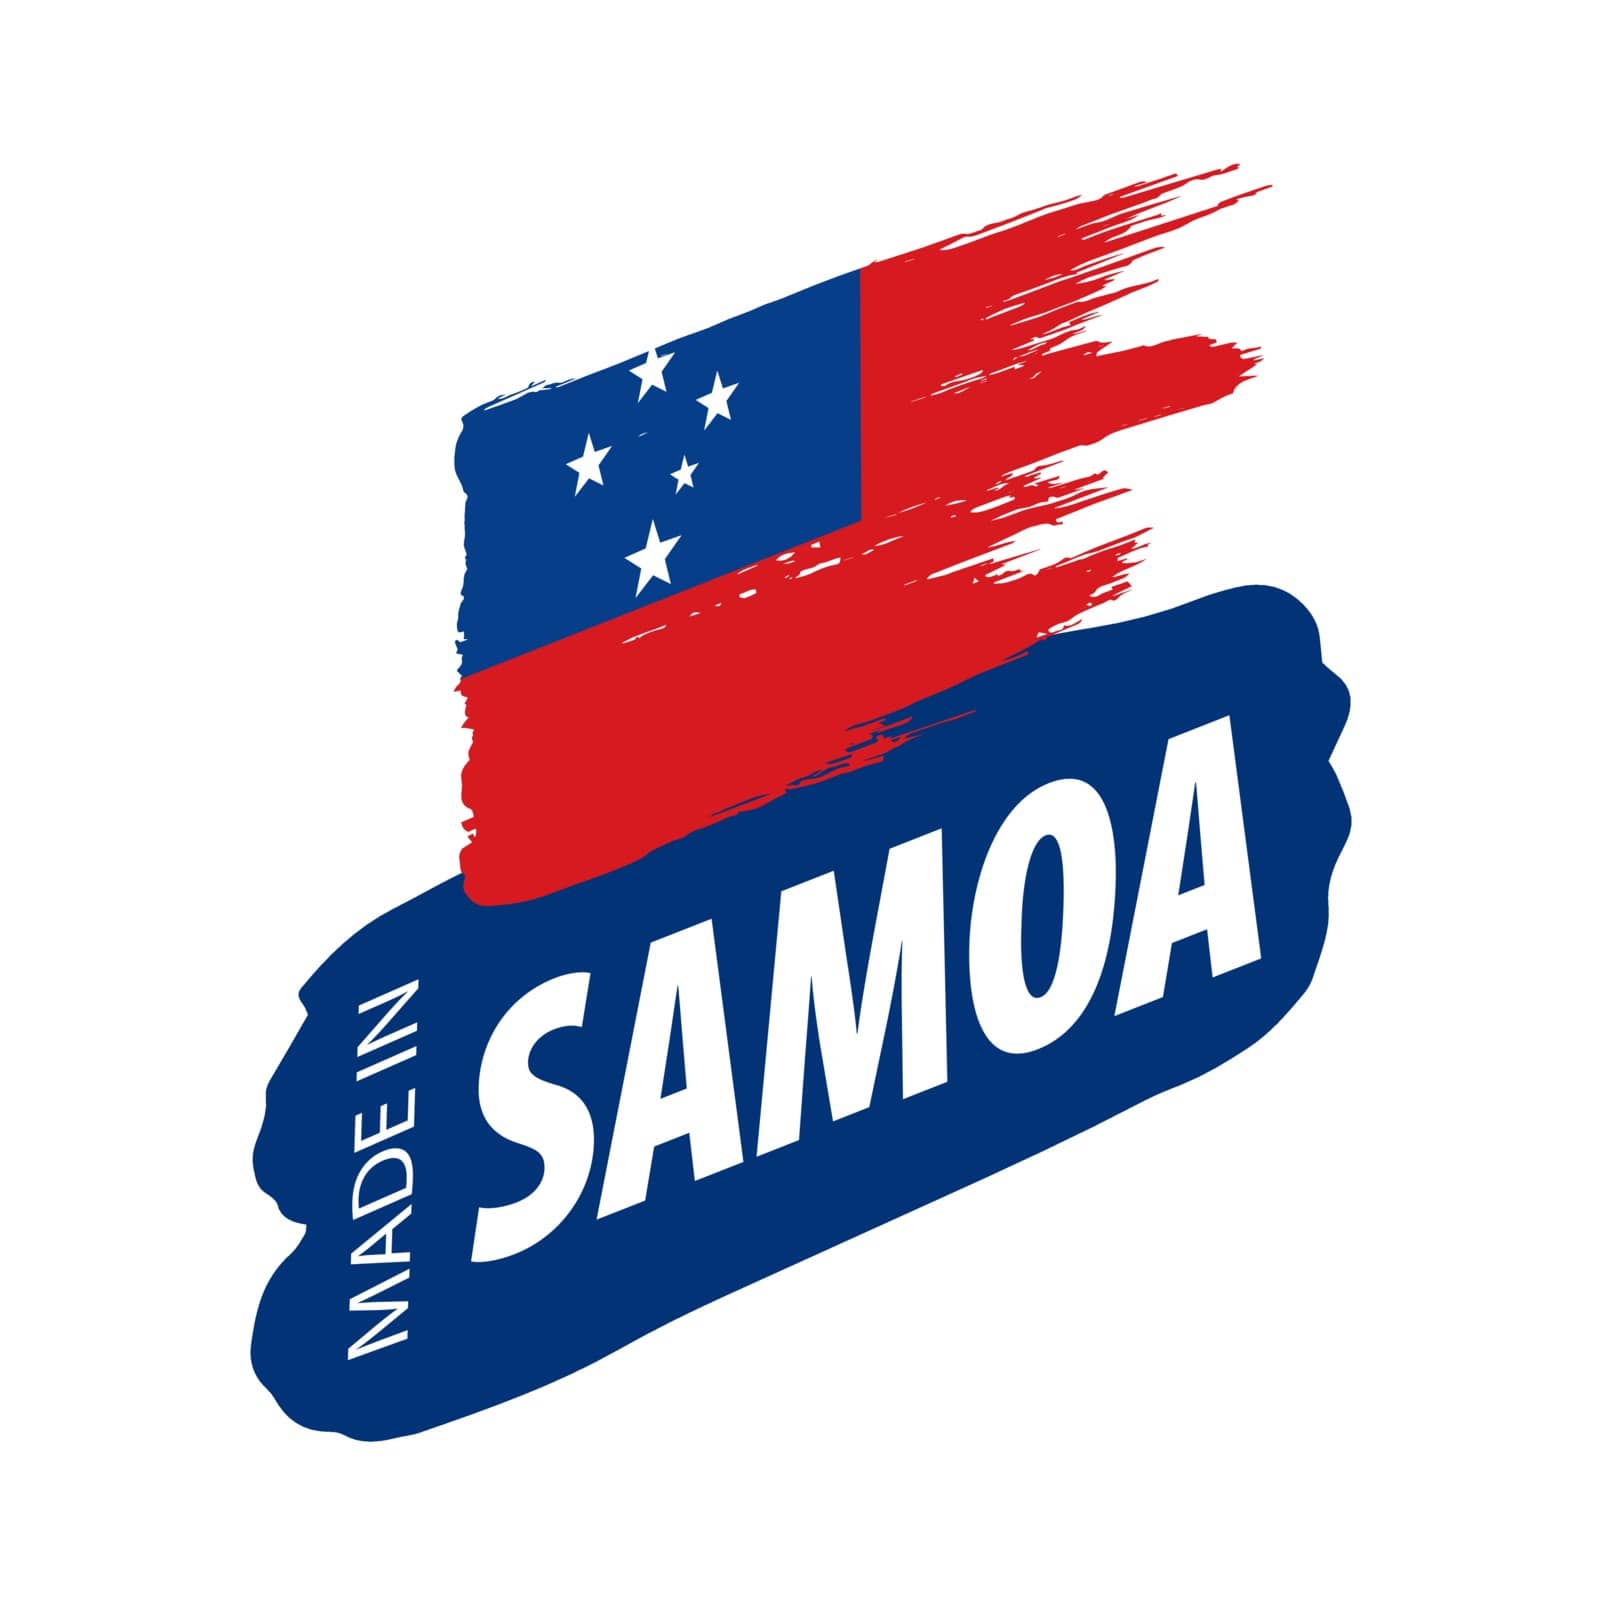 Samoa flag, vector illustration on a white background. by butenkow